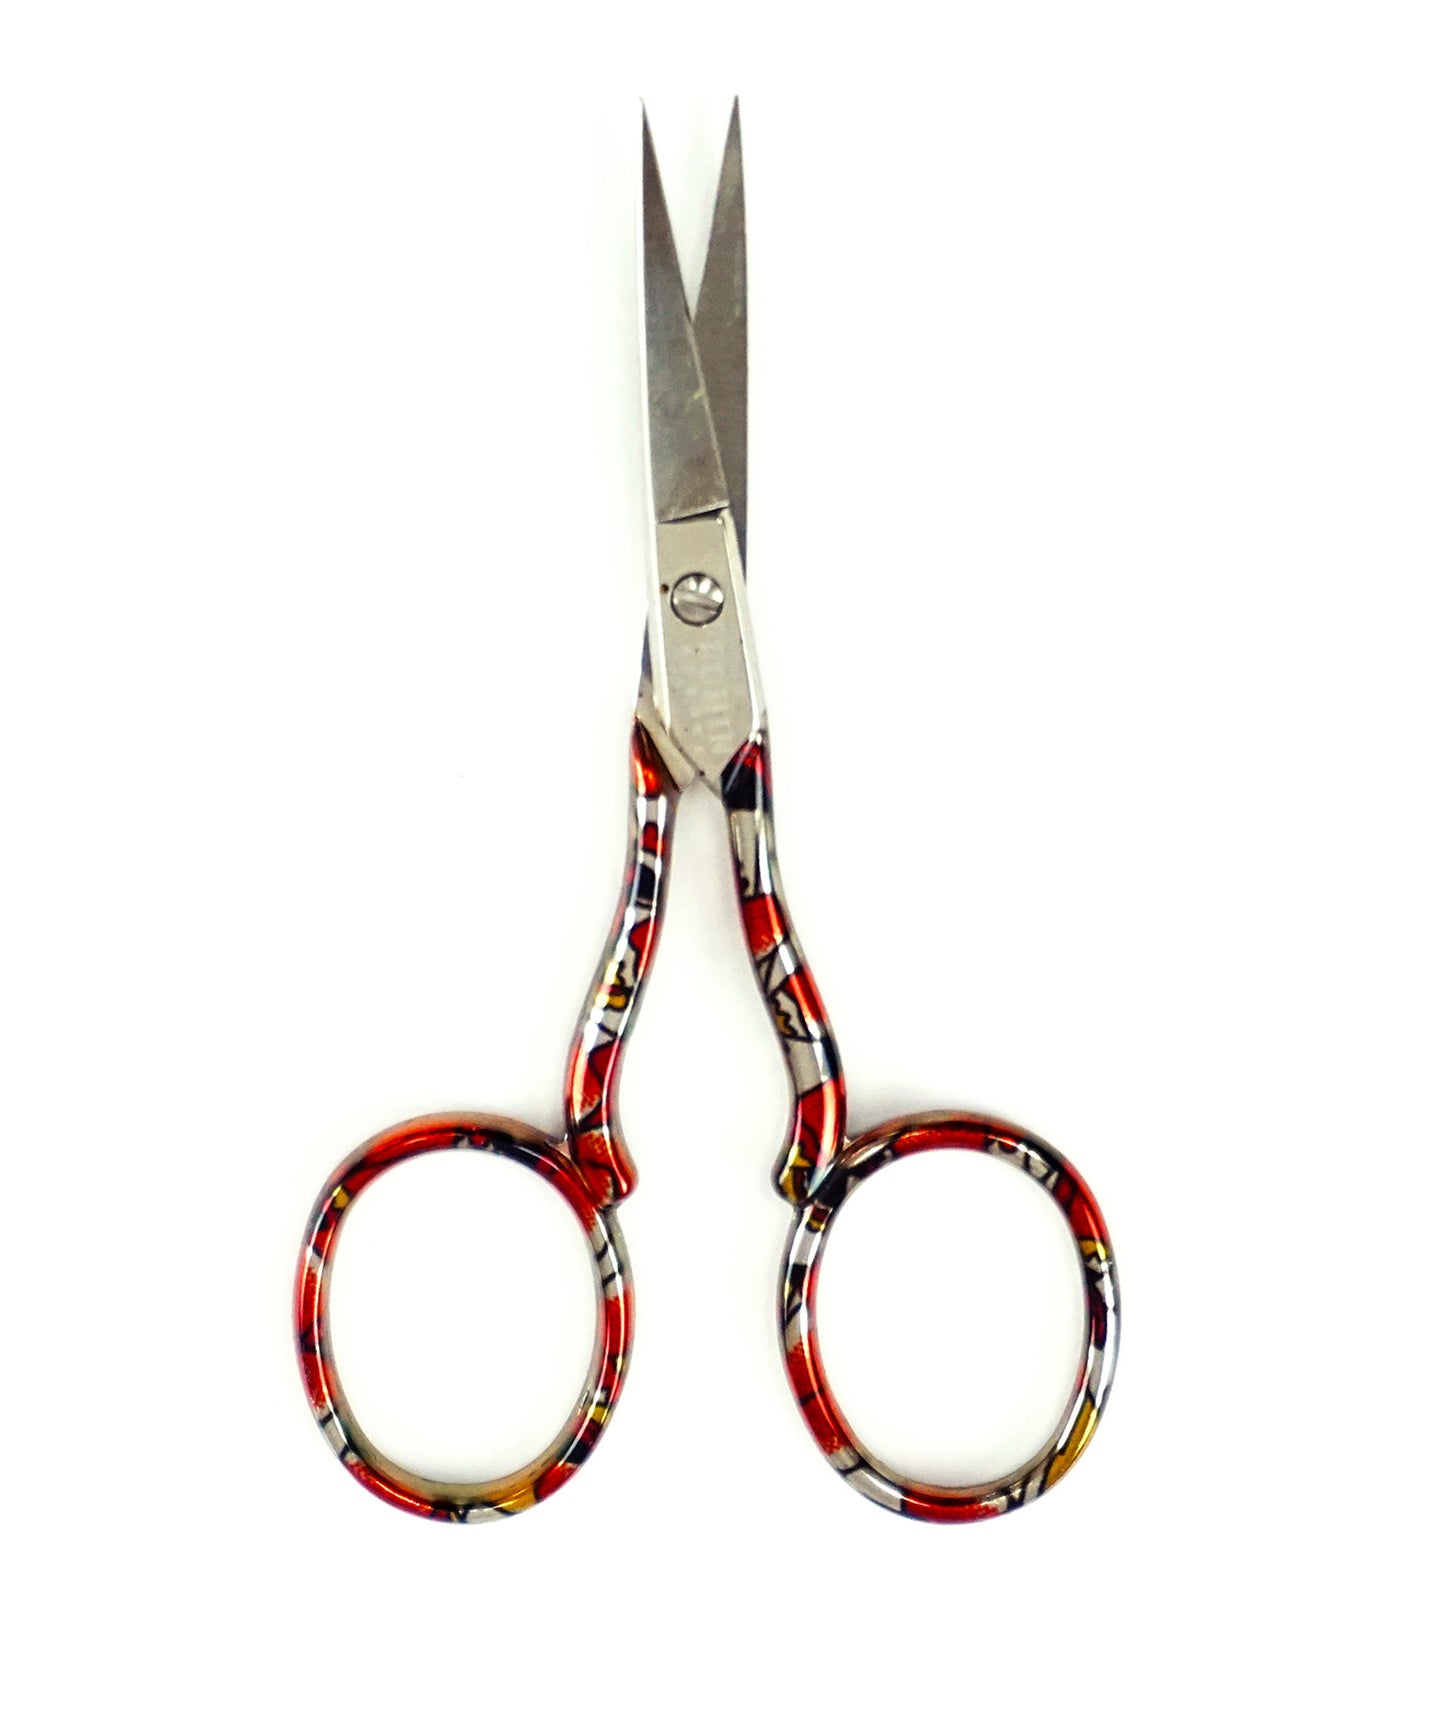 SCISSORS ~ Bohin "Giakarta" Marbleized French Embroidery Scissors for Needlepoint, Embroidery, X-Stitch